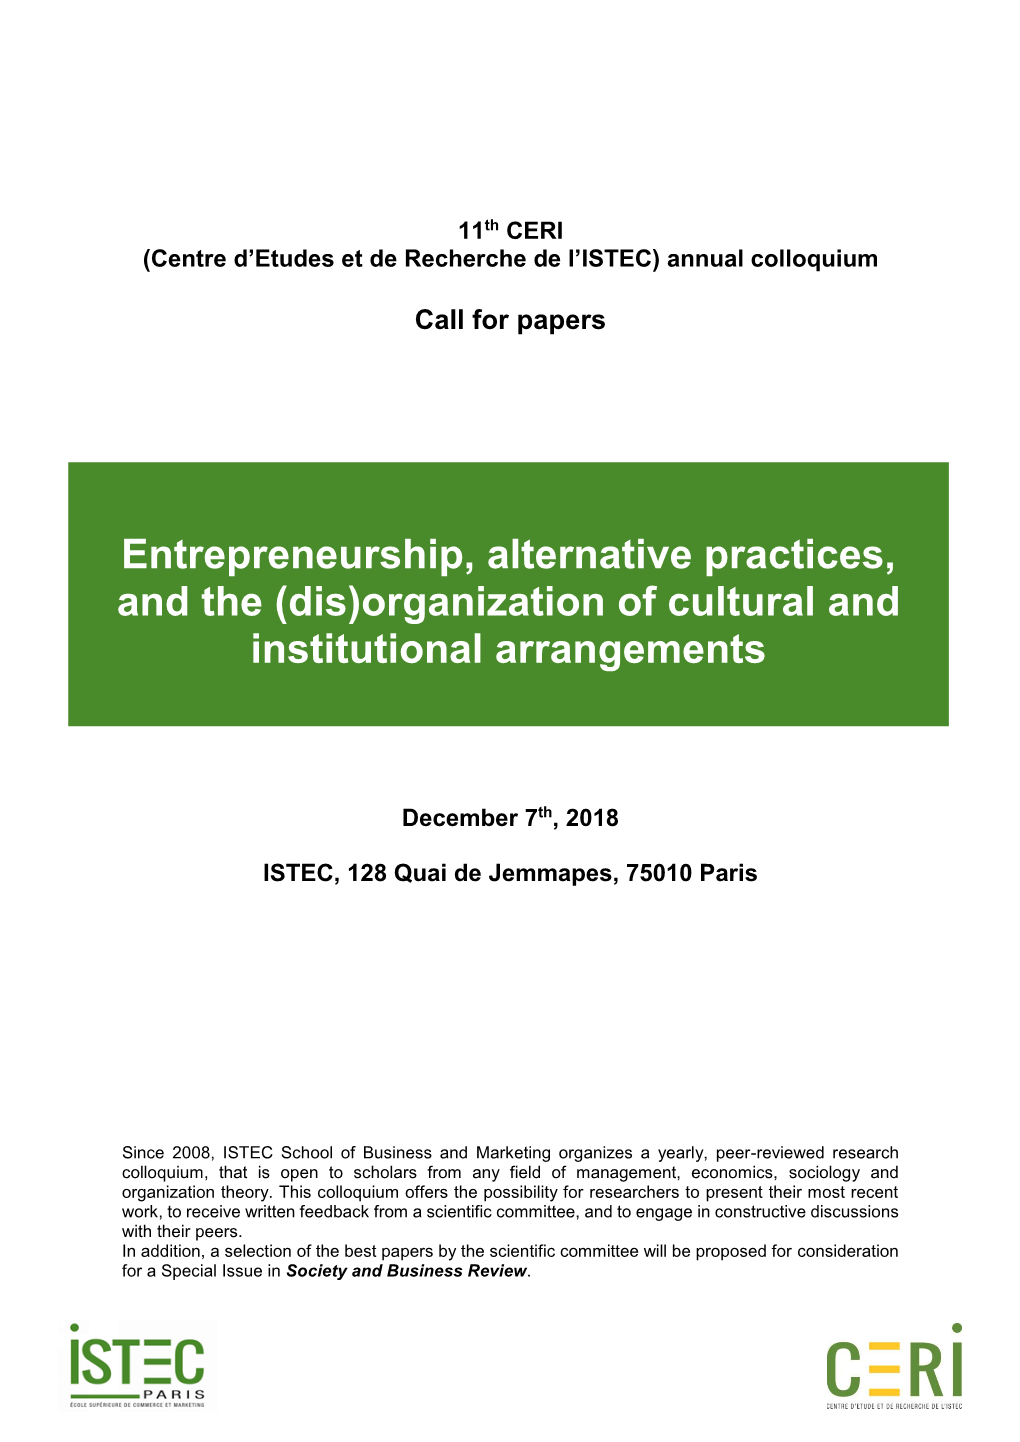 Entrepreneurship, Alternative Practices, and the (Dis)Organization